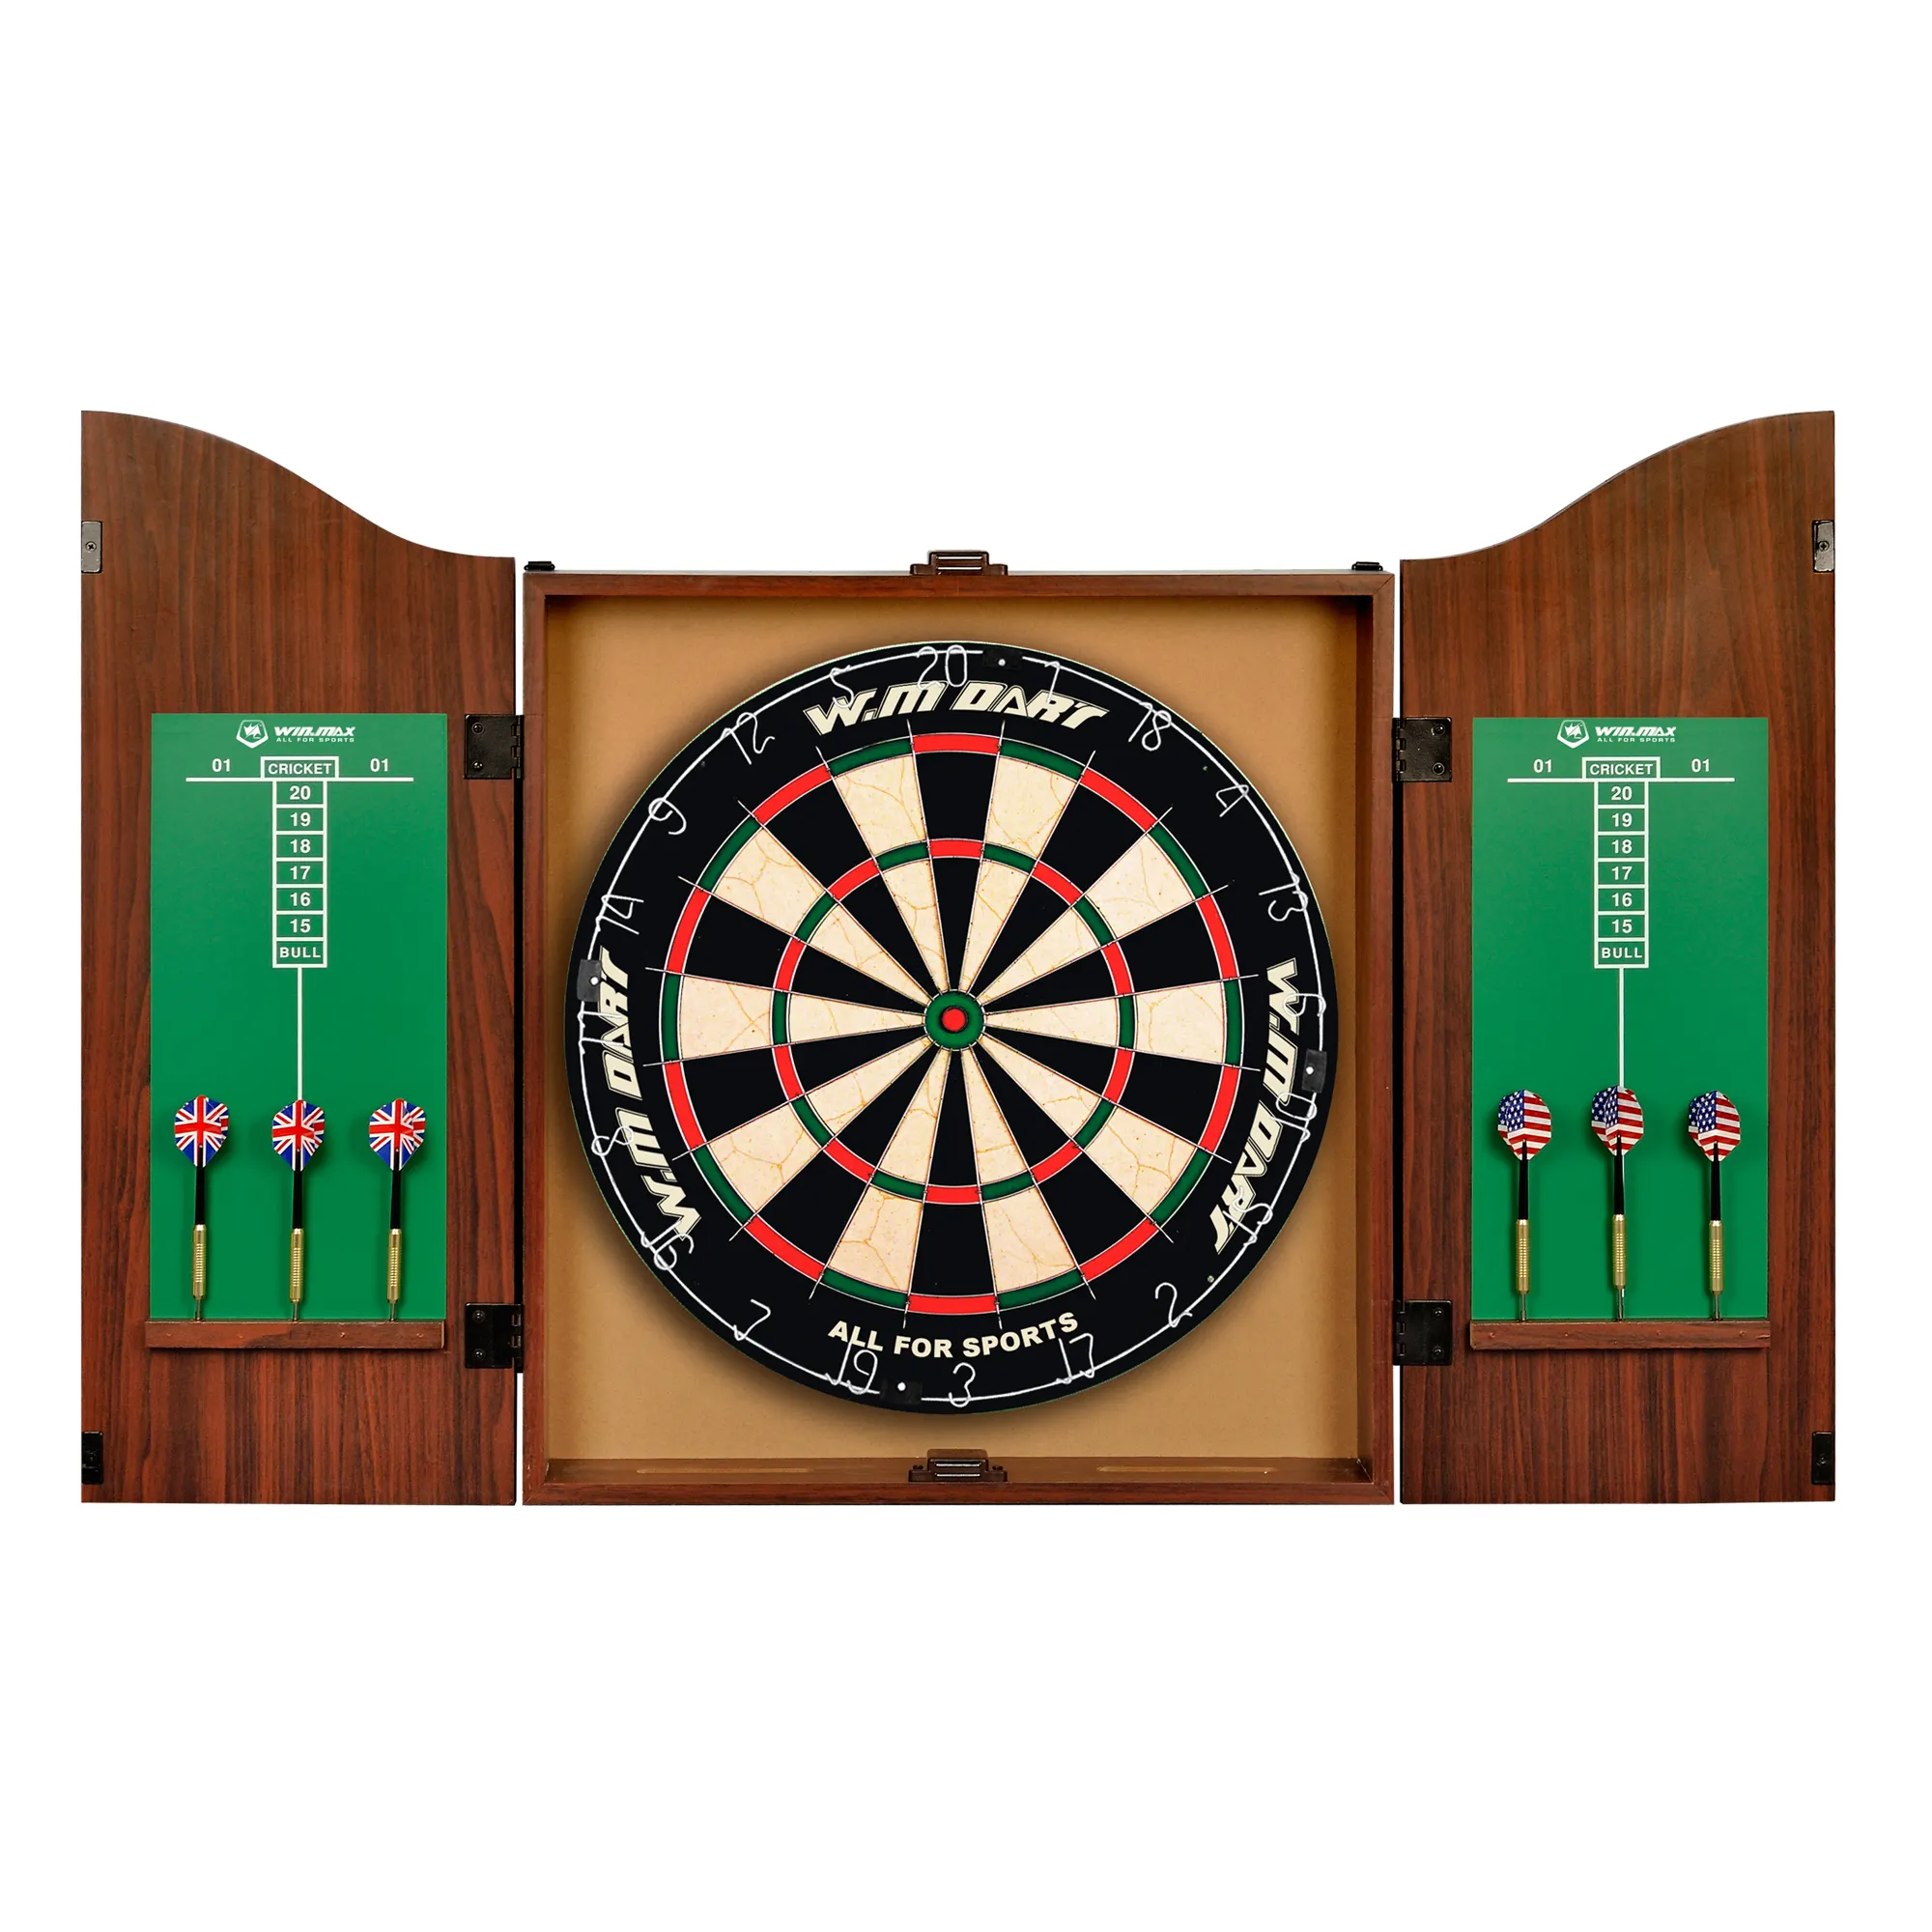 18" MDF round wire sisal dartboard cabinet dartboard set